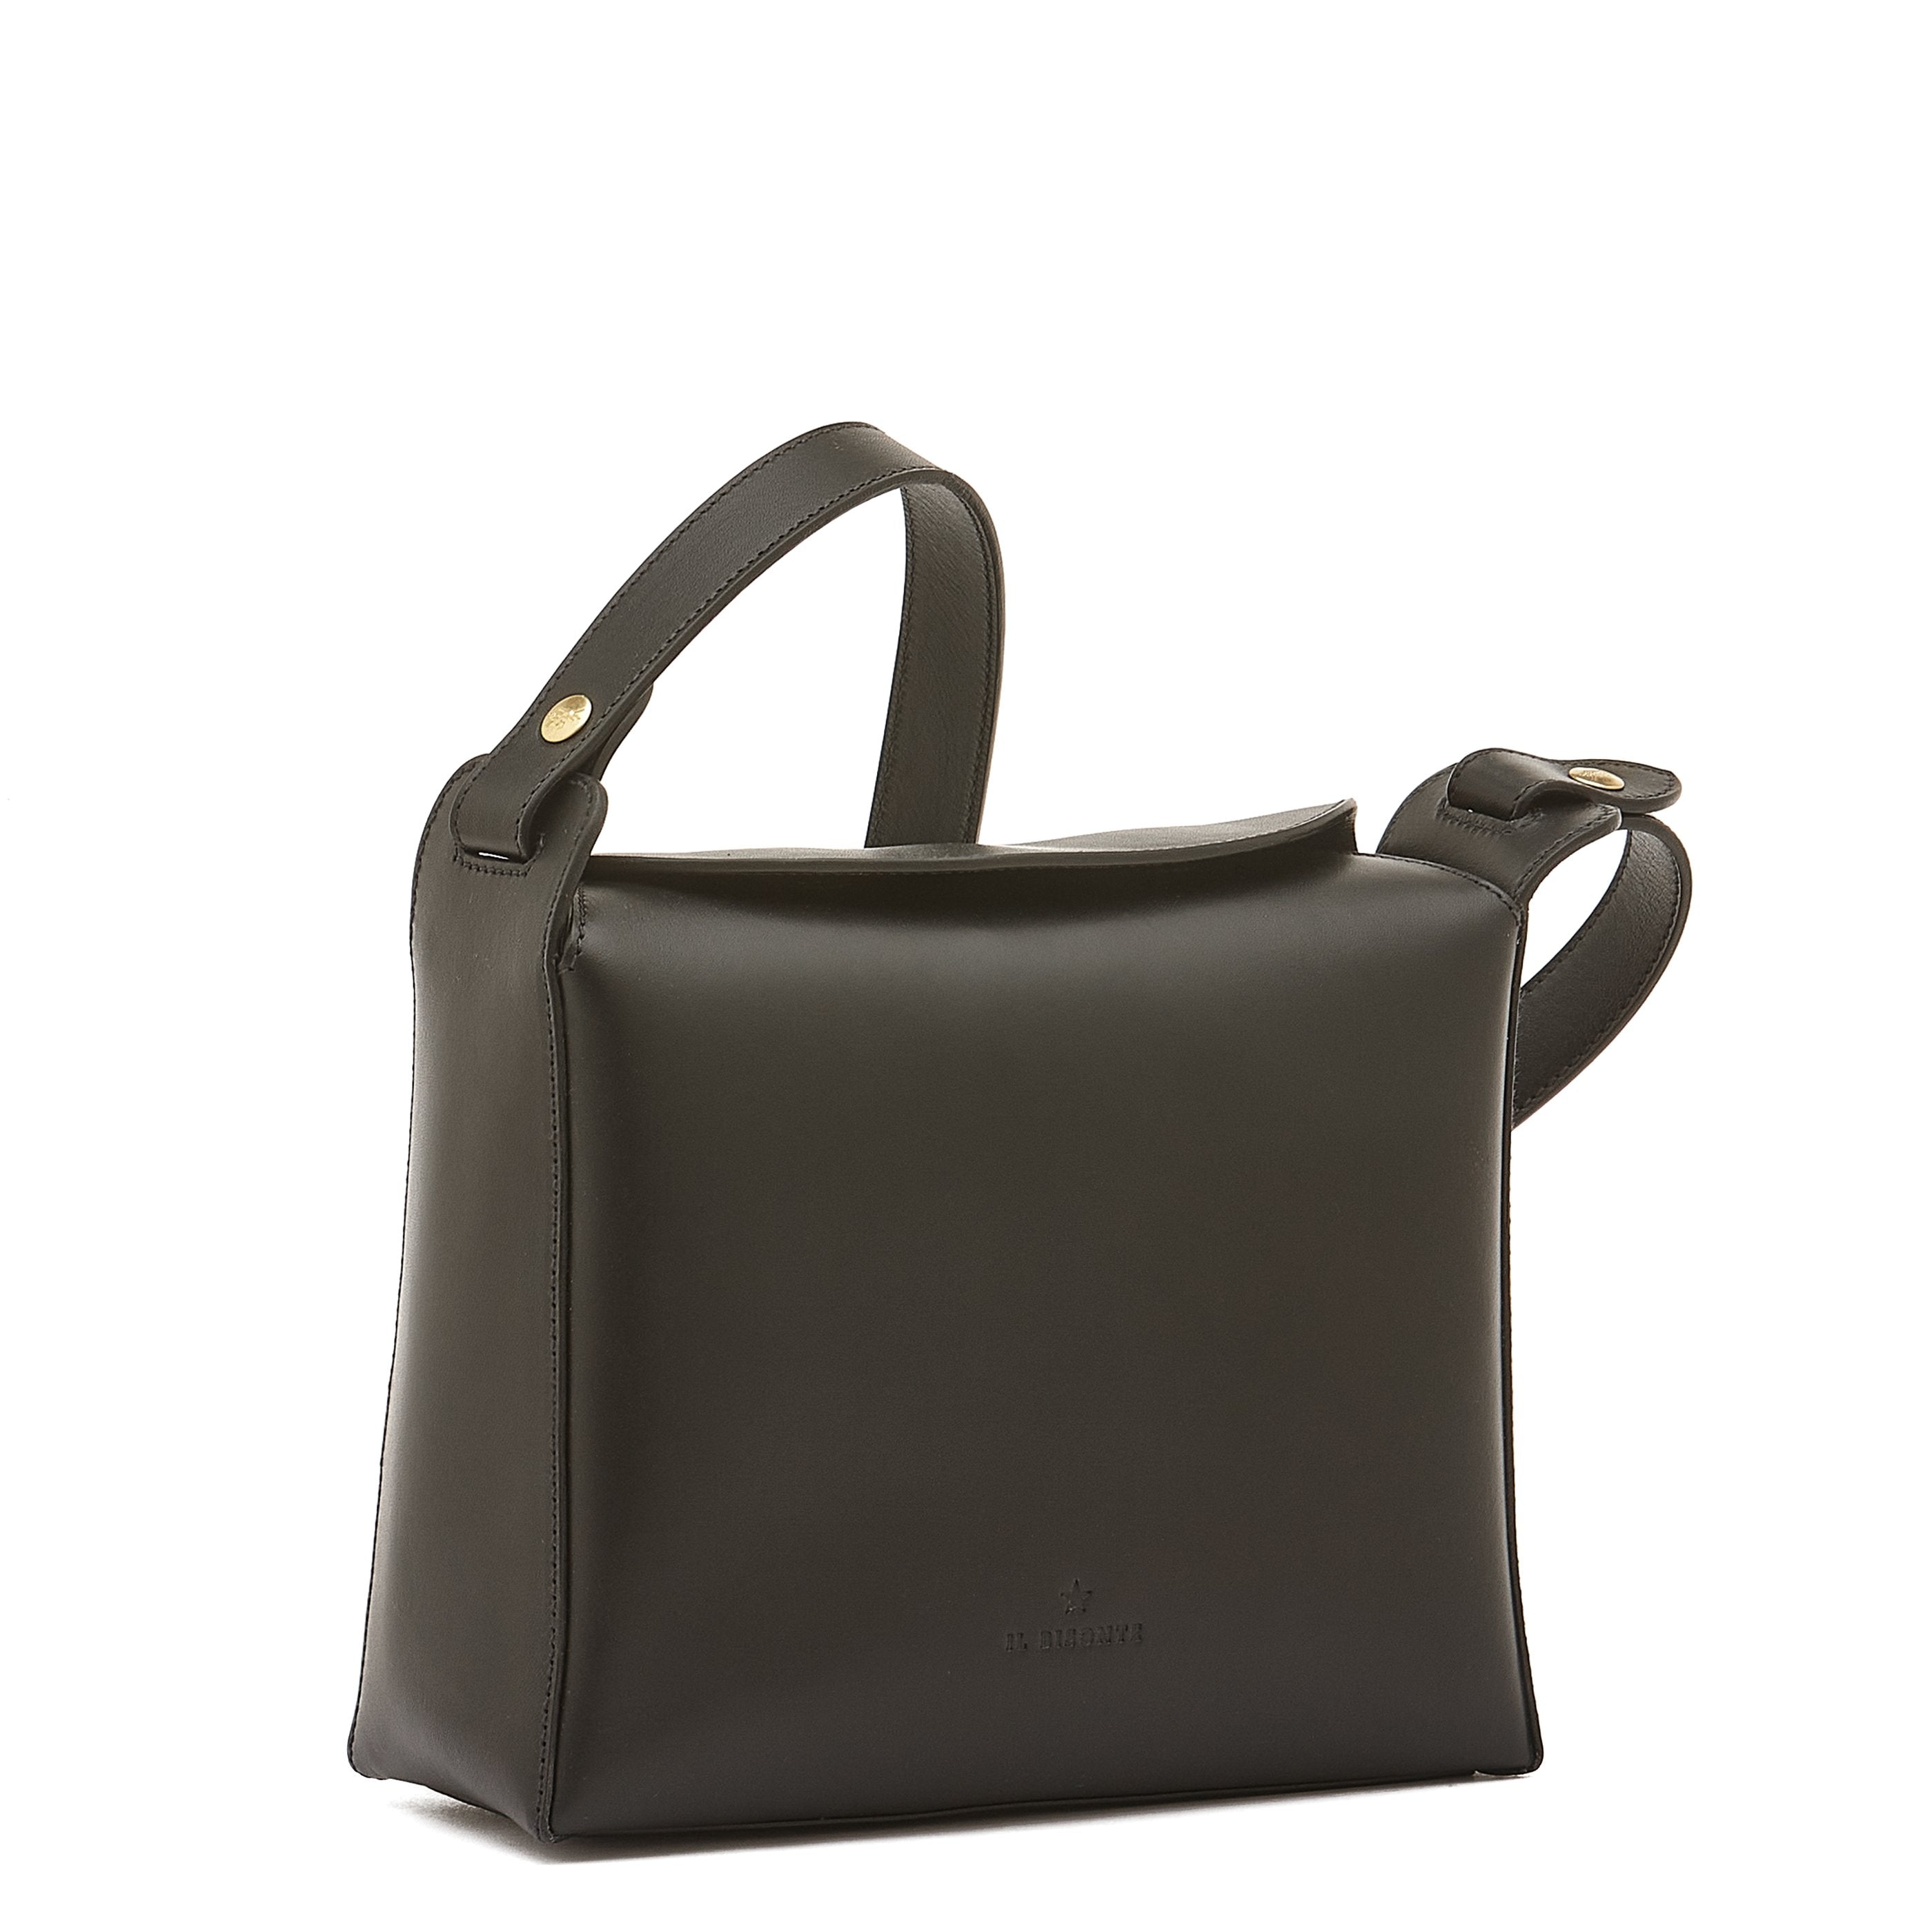 Maggio | Women's shoulder bag in leather color black